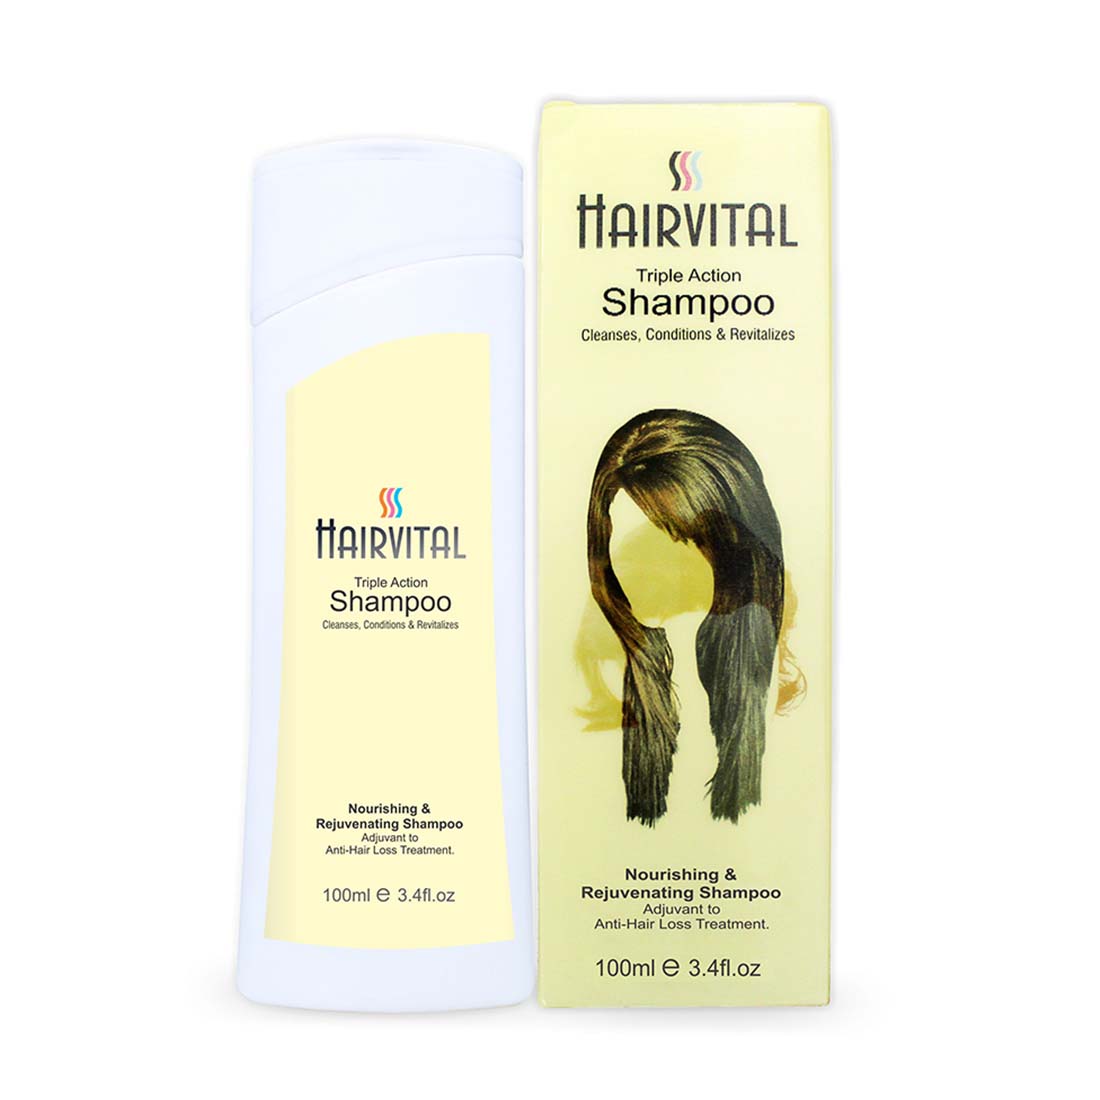 Hairvital Shampoo 100ml